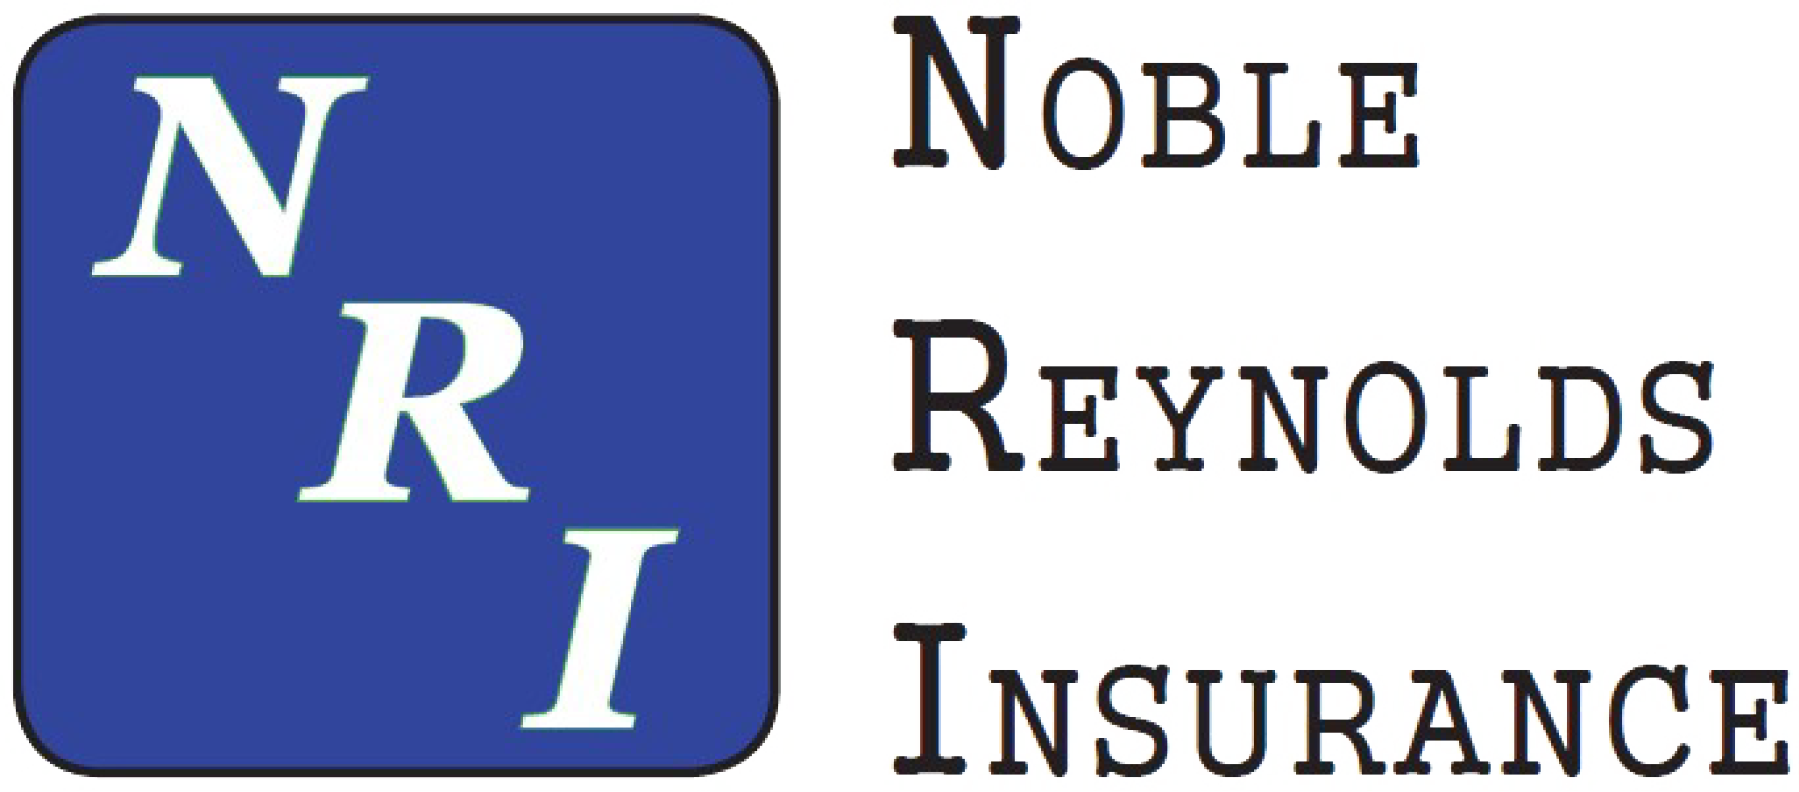 Noble Reynolds Insurance logo